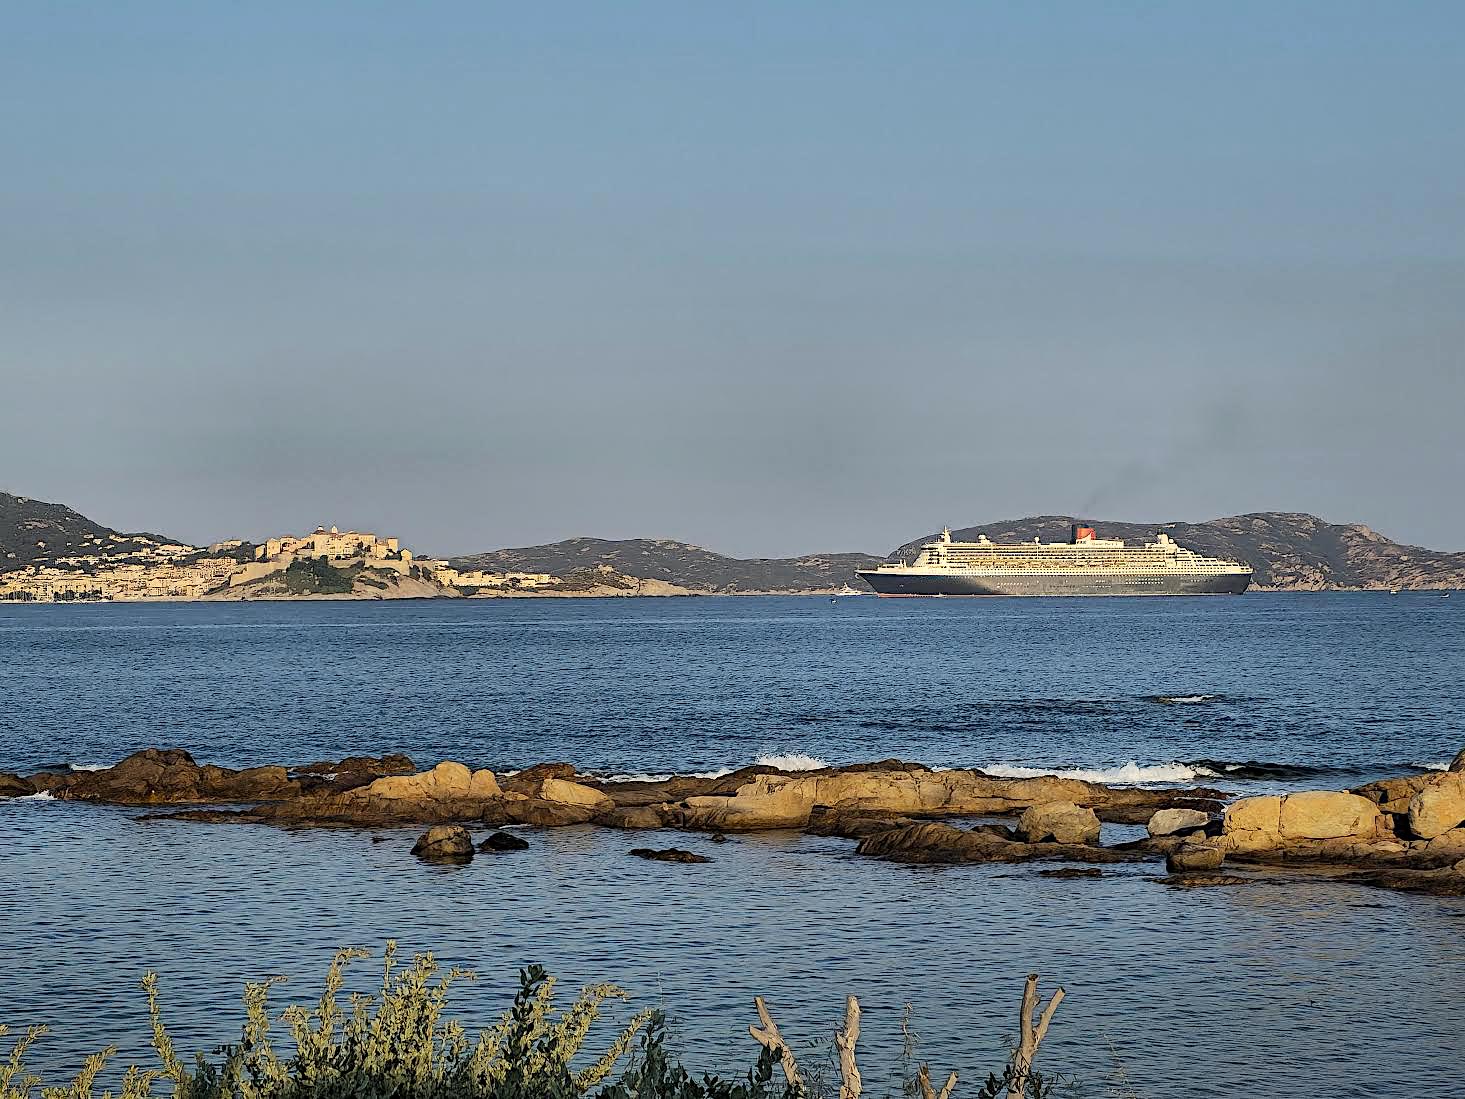 Le Queen Mary 2 dans la baie de Calvi (Photo Arnaud Crettaz)